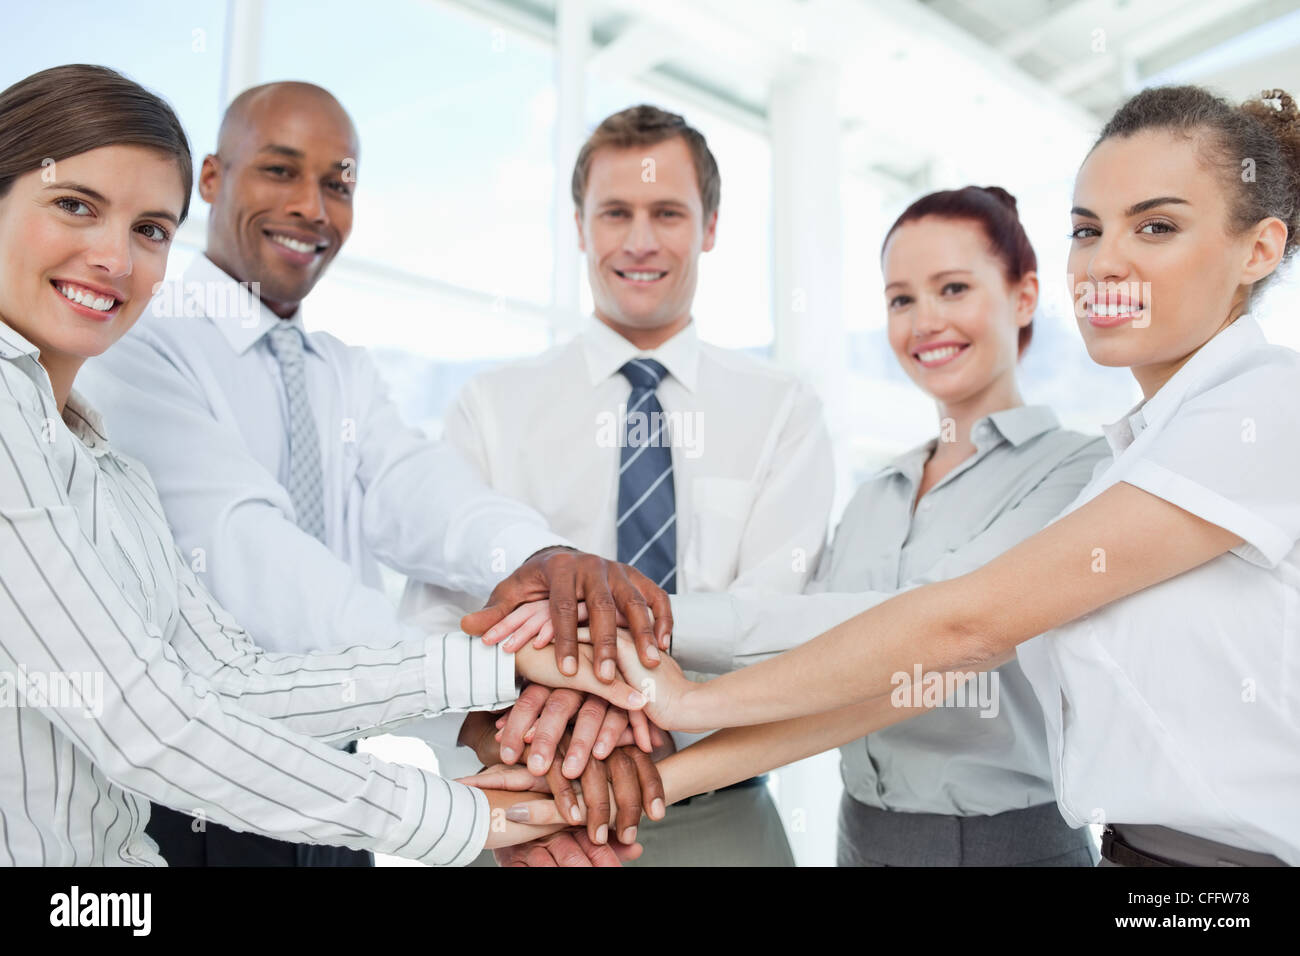 Smiling salesteam doing teamwork gesture Stock Photo